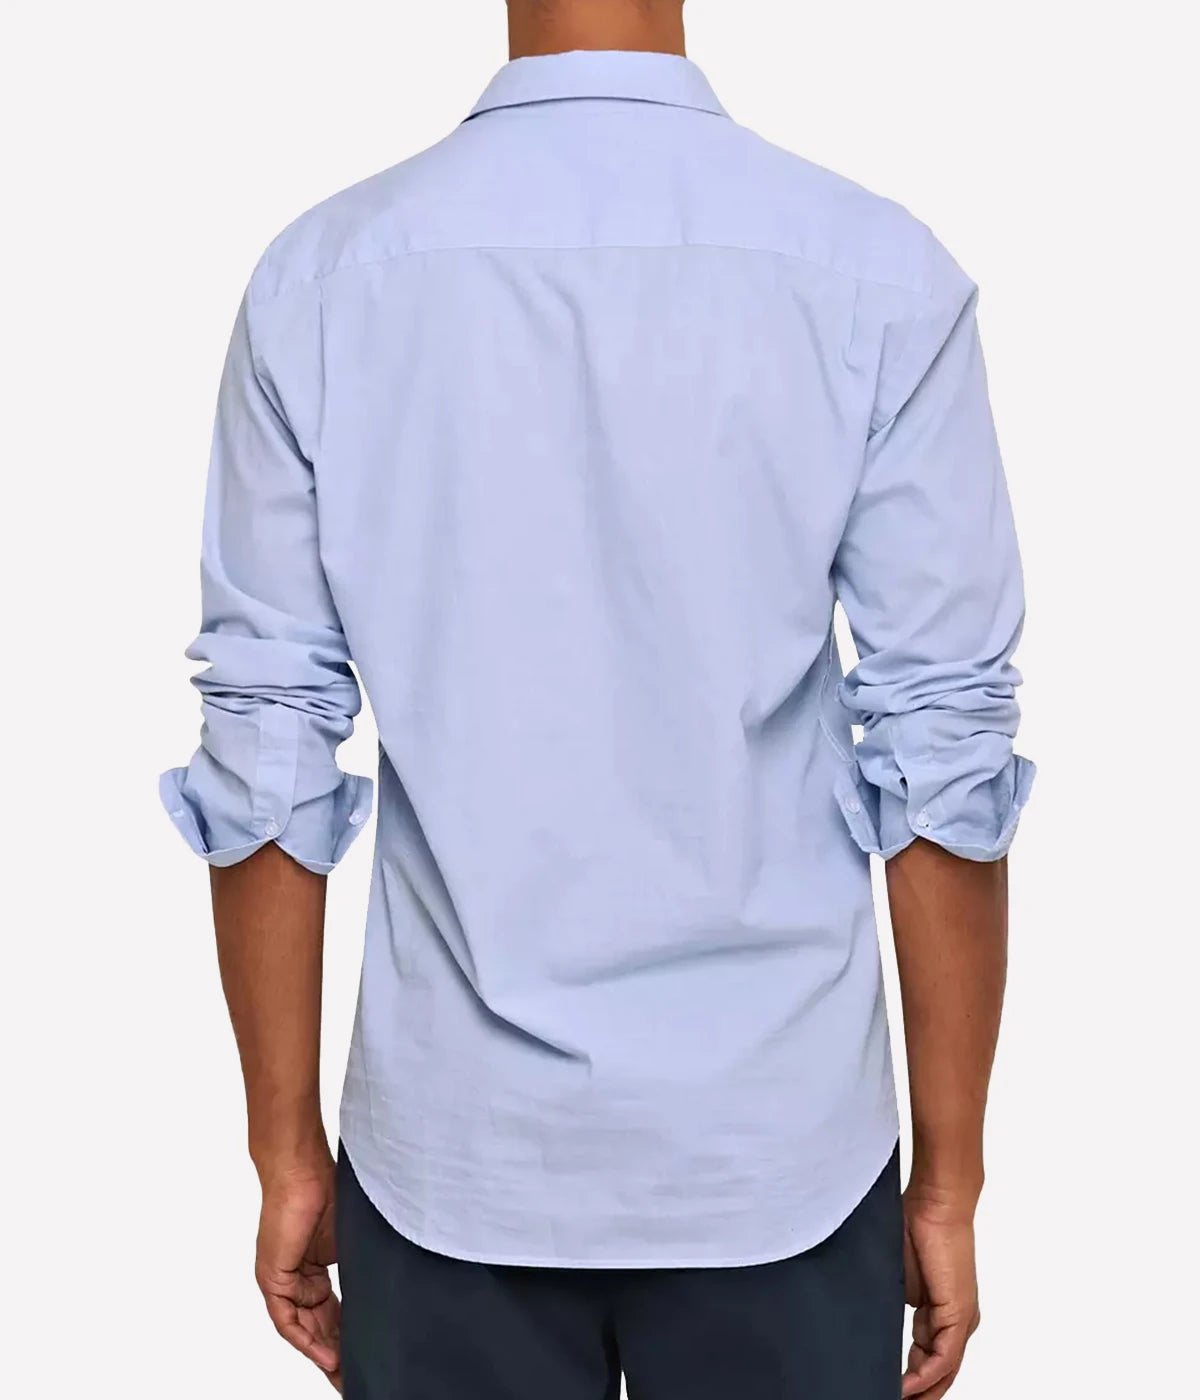 Giles Linen Shirt in Ice Blue & White